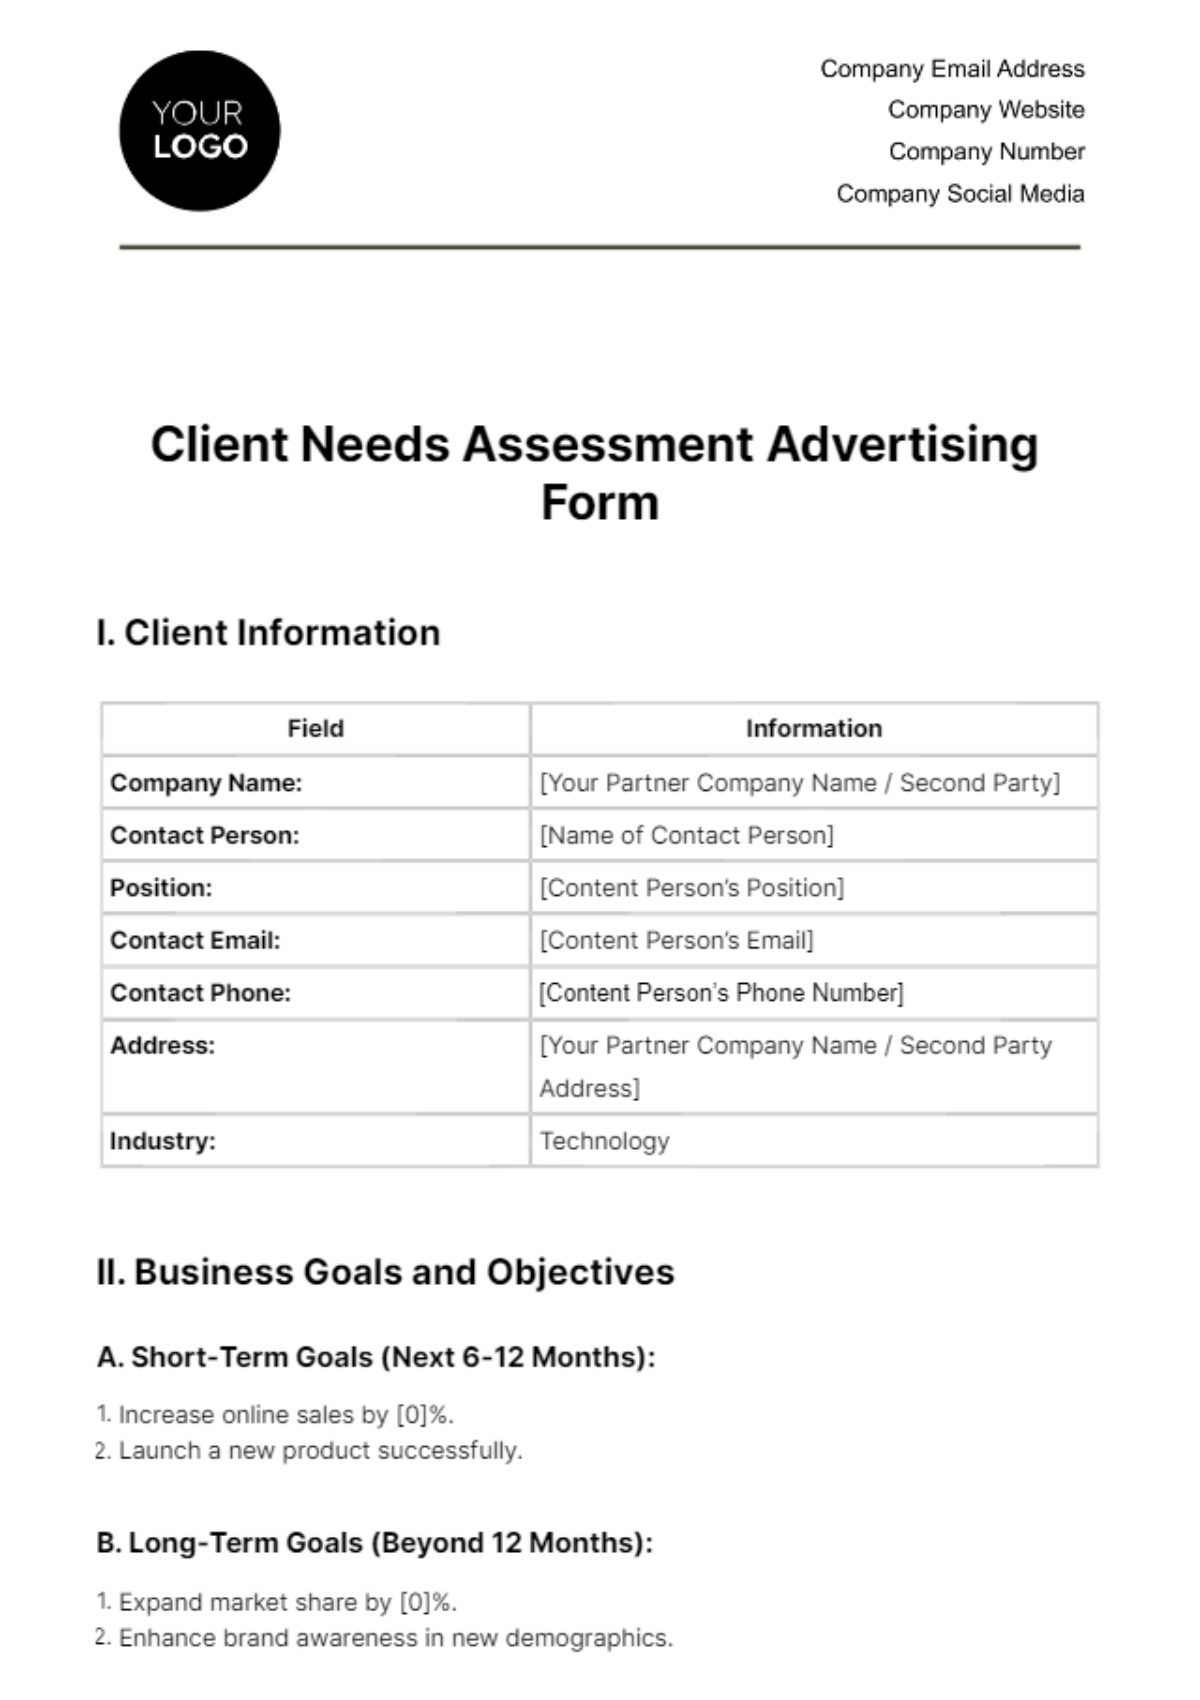 Client Needs Assessment Advertising Form Template